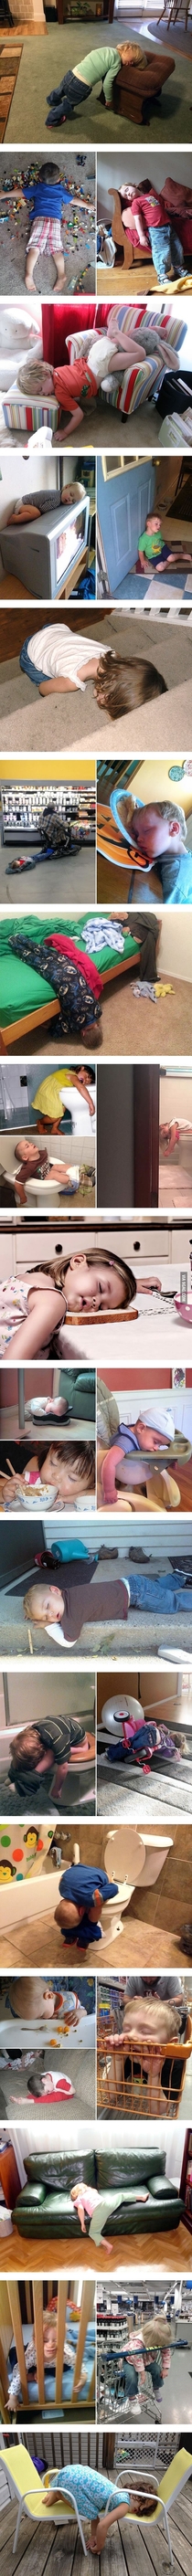 Kids can fall asleep anywhere